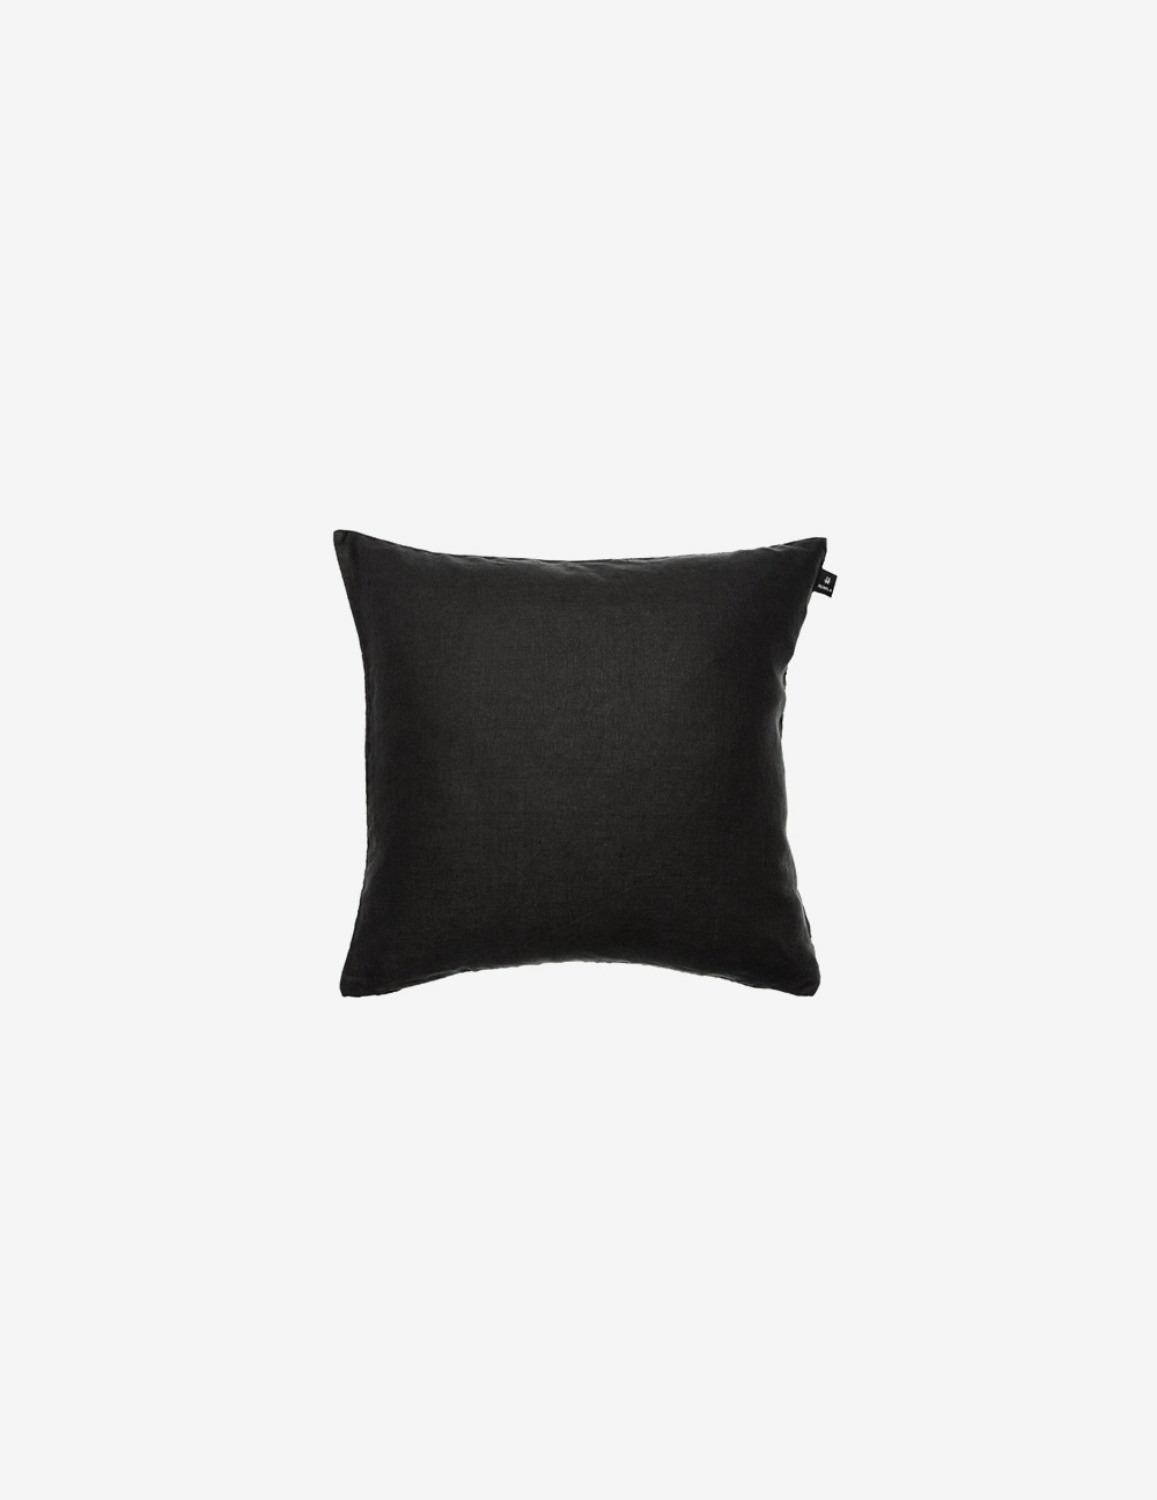 [HIMLA] Sunshine Cushion / Black (50x50)